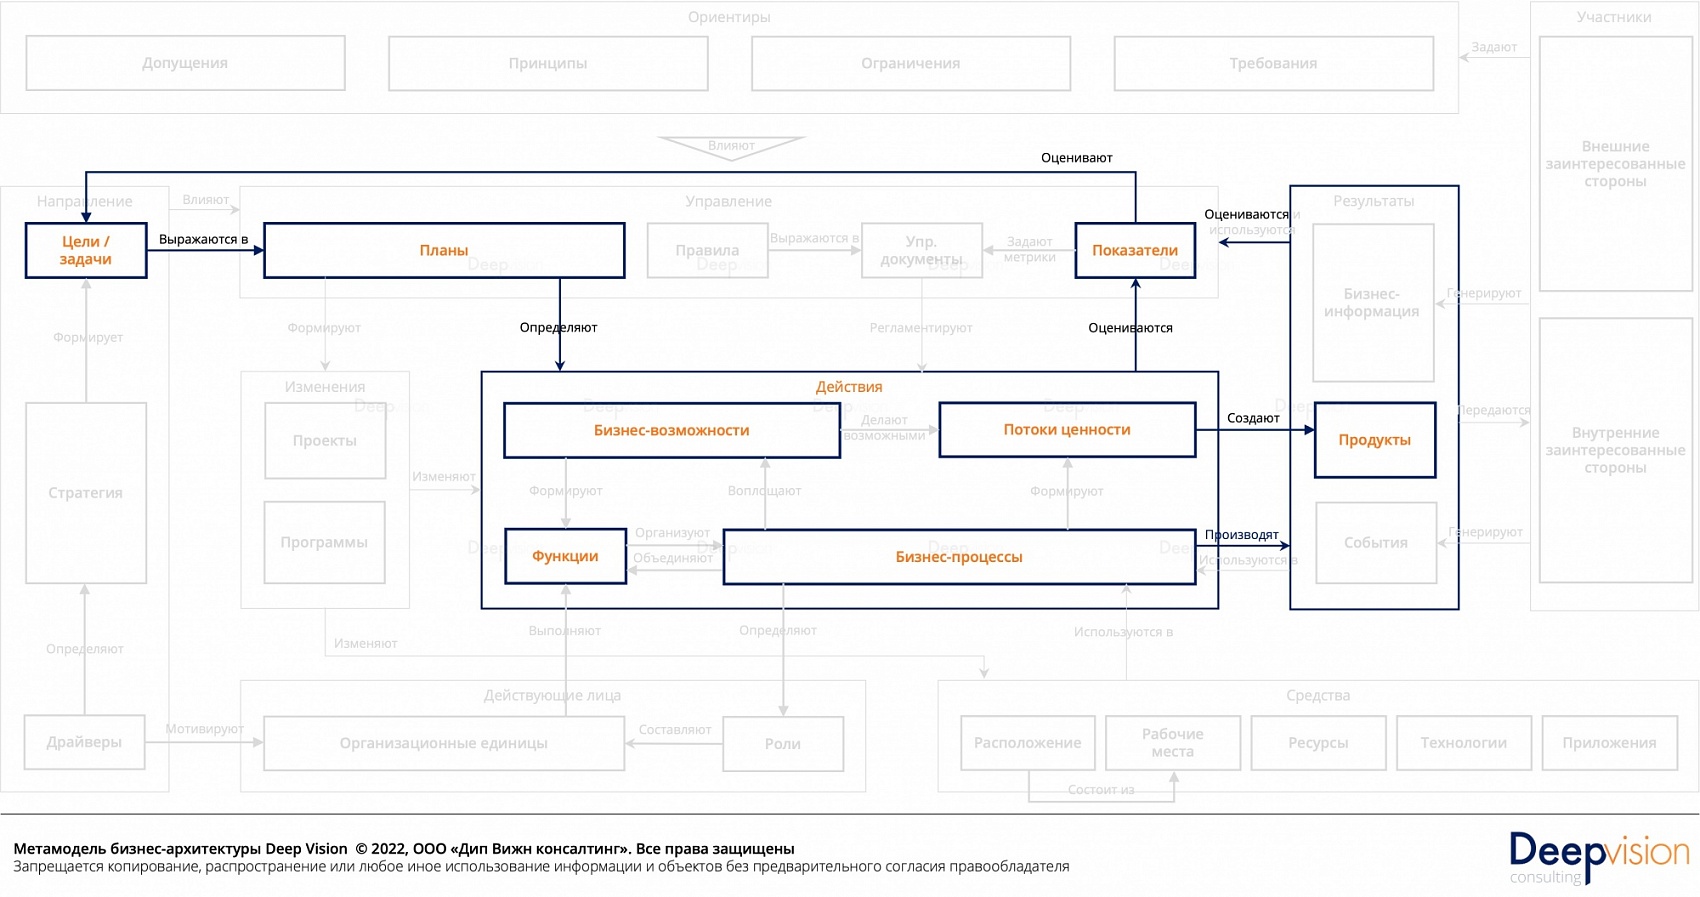 Метамодель бизнес-архитектуры - продуктовыи контур.jpg